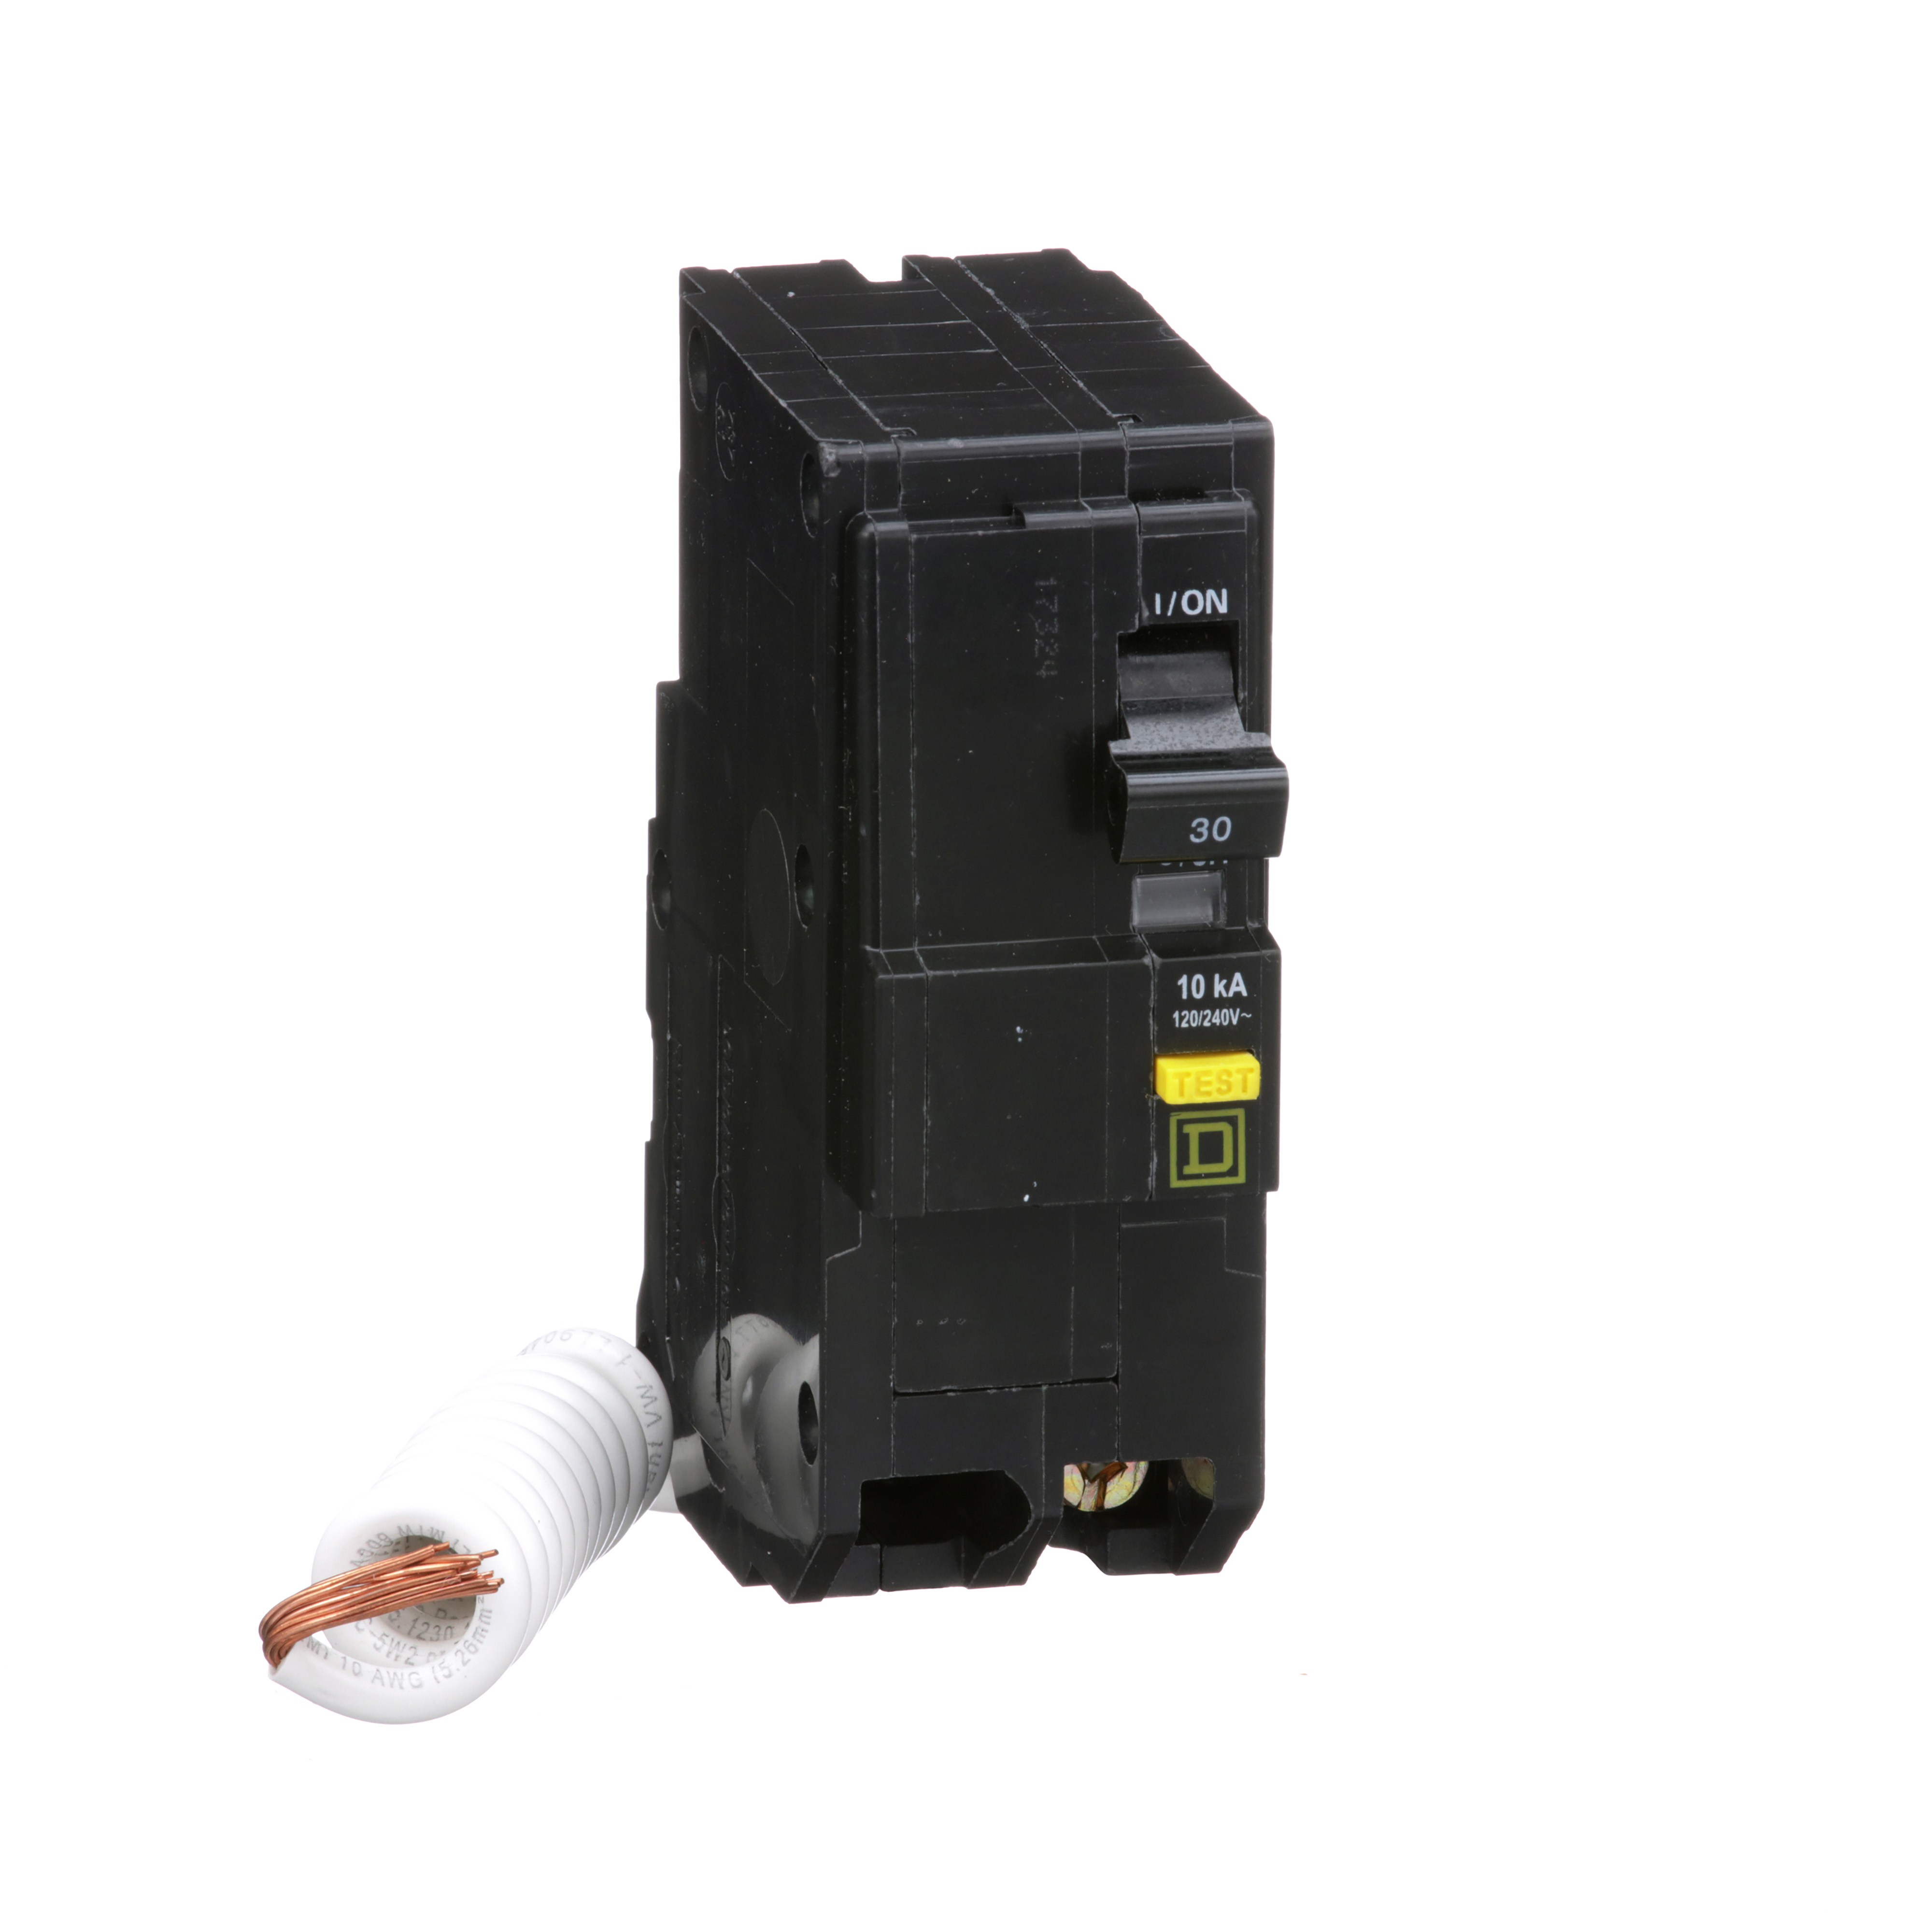 Mini circuit breaker, QO, 30A, 2 pole, 120/240VAC, 10kA, 6mA grd fault A, pigtail, plug in mount